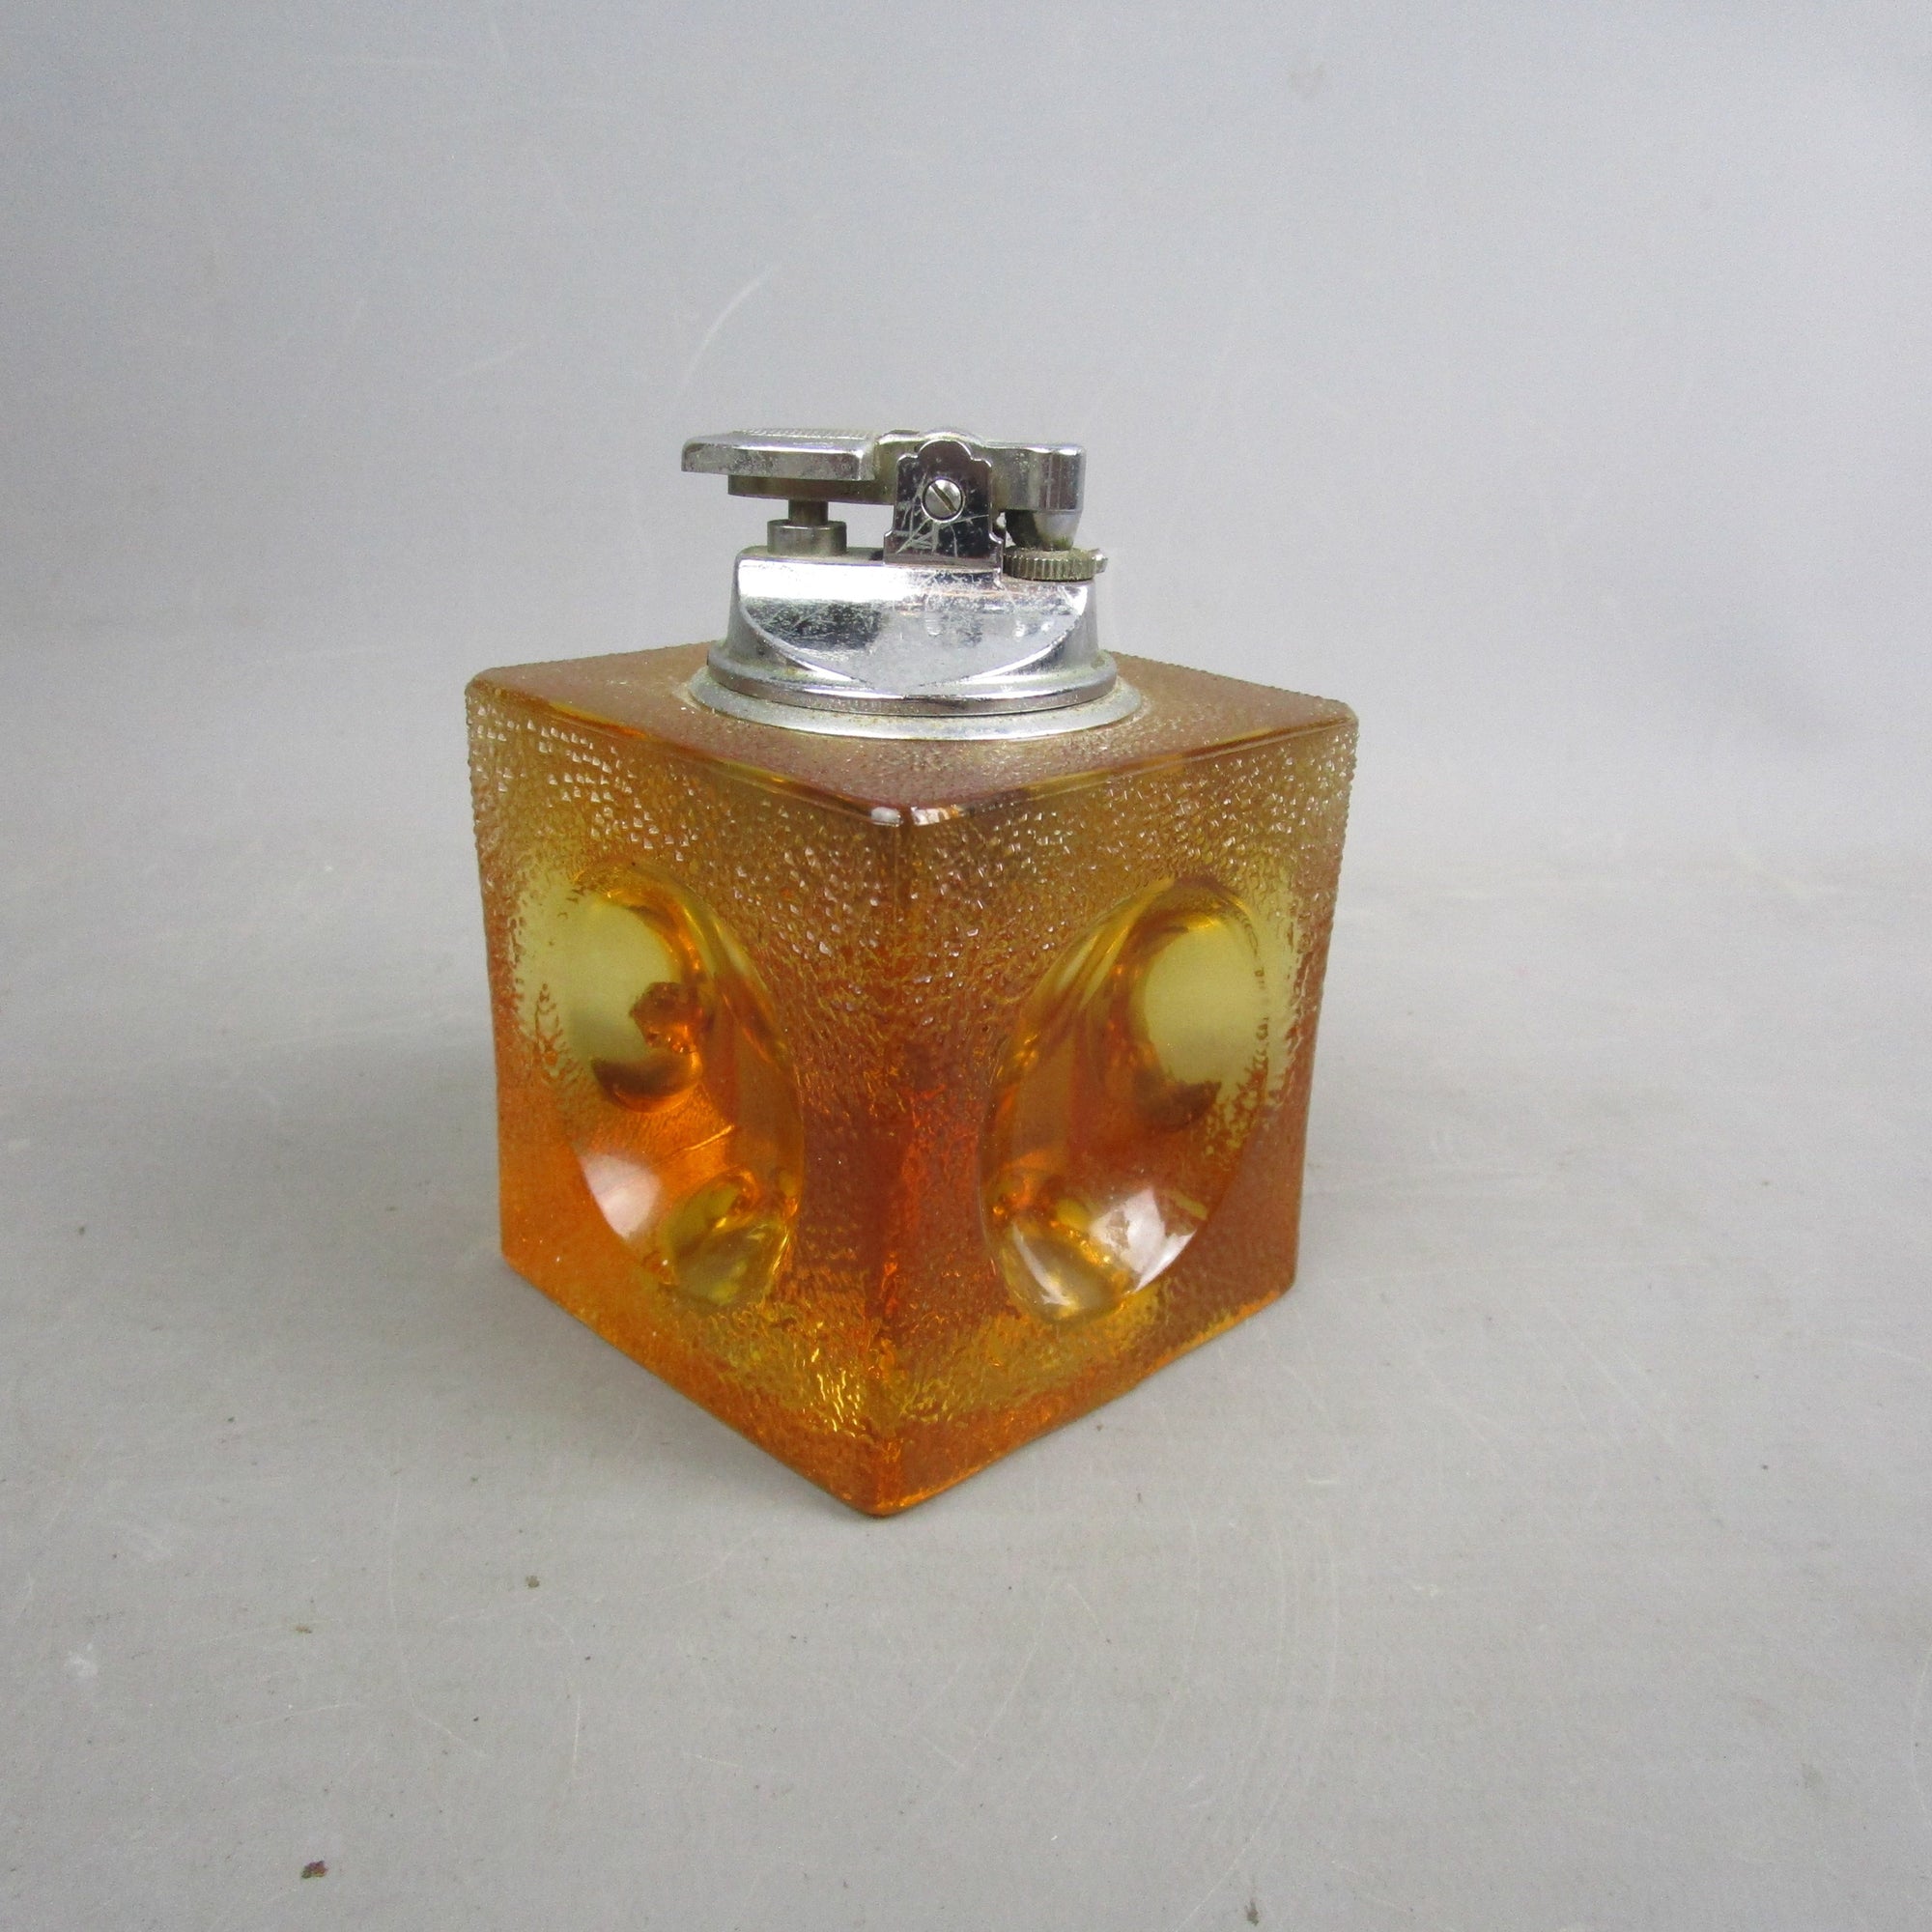 Japanese Amber Glass Retro Styled Table Lighter Vintage c1970